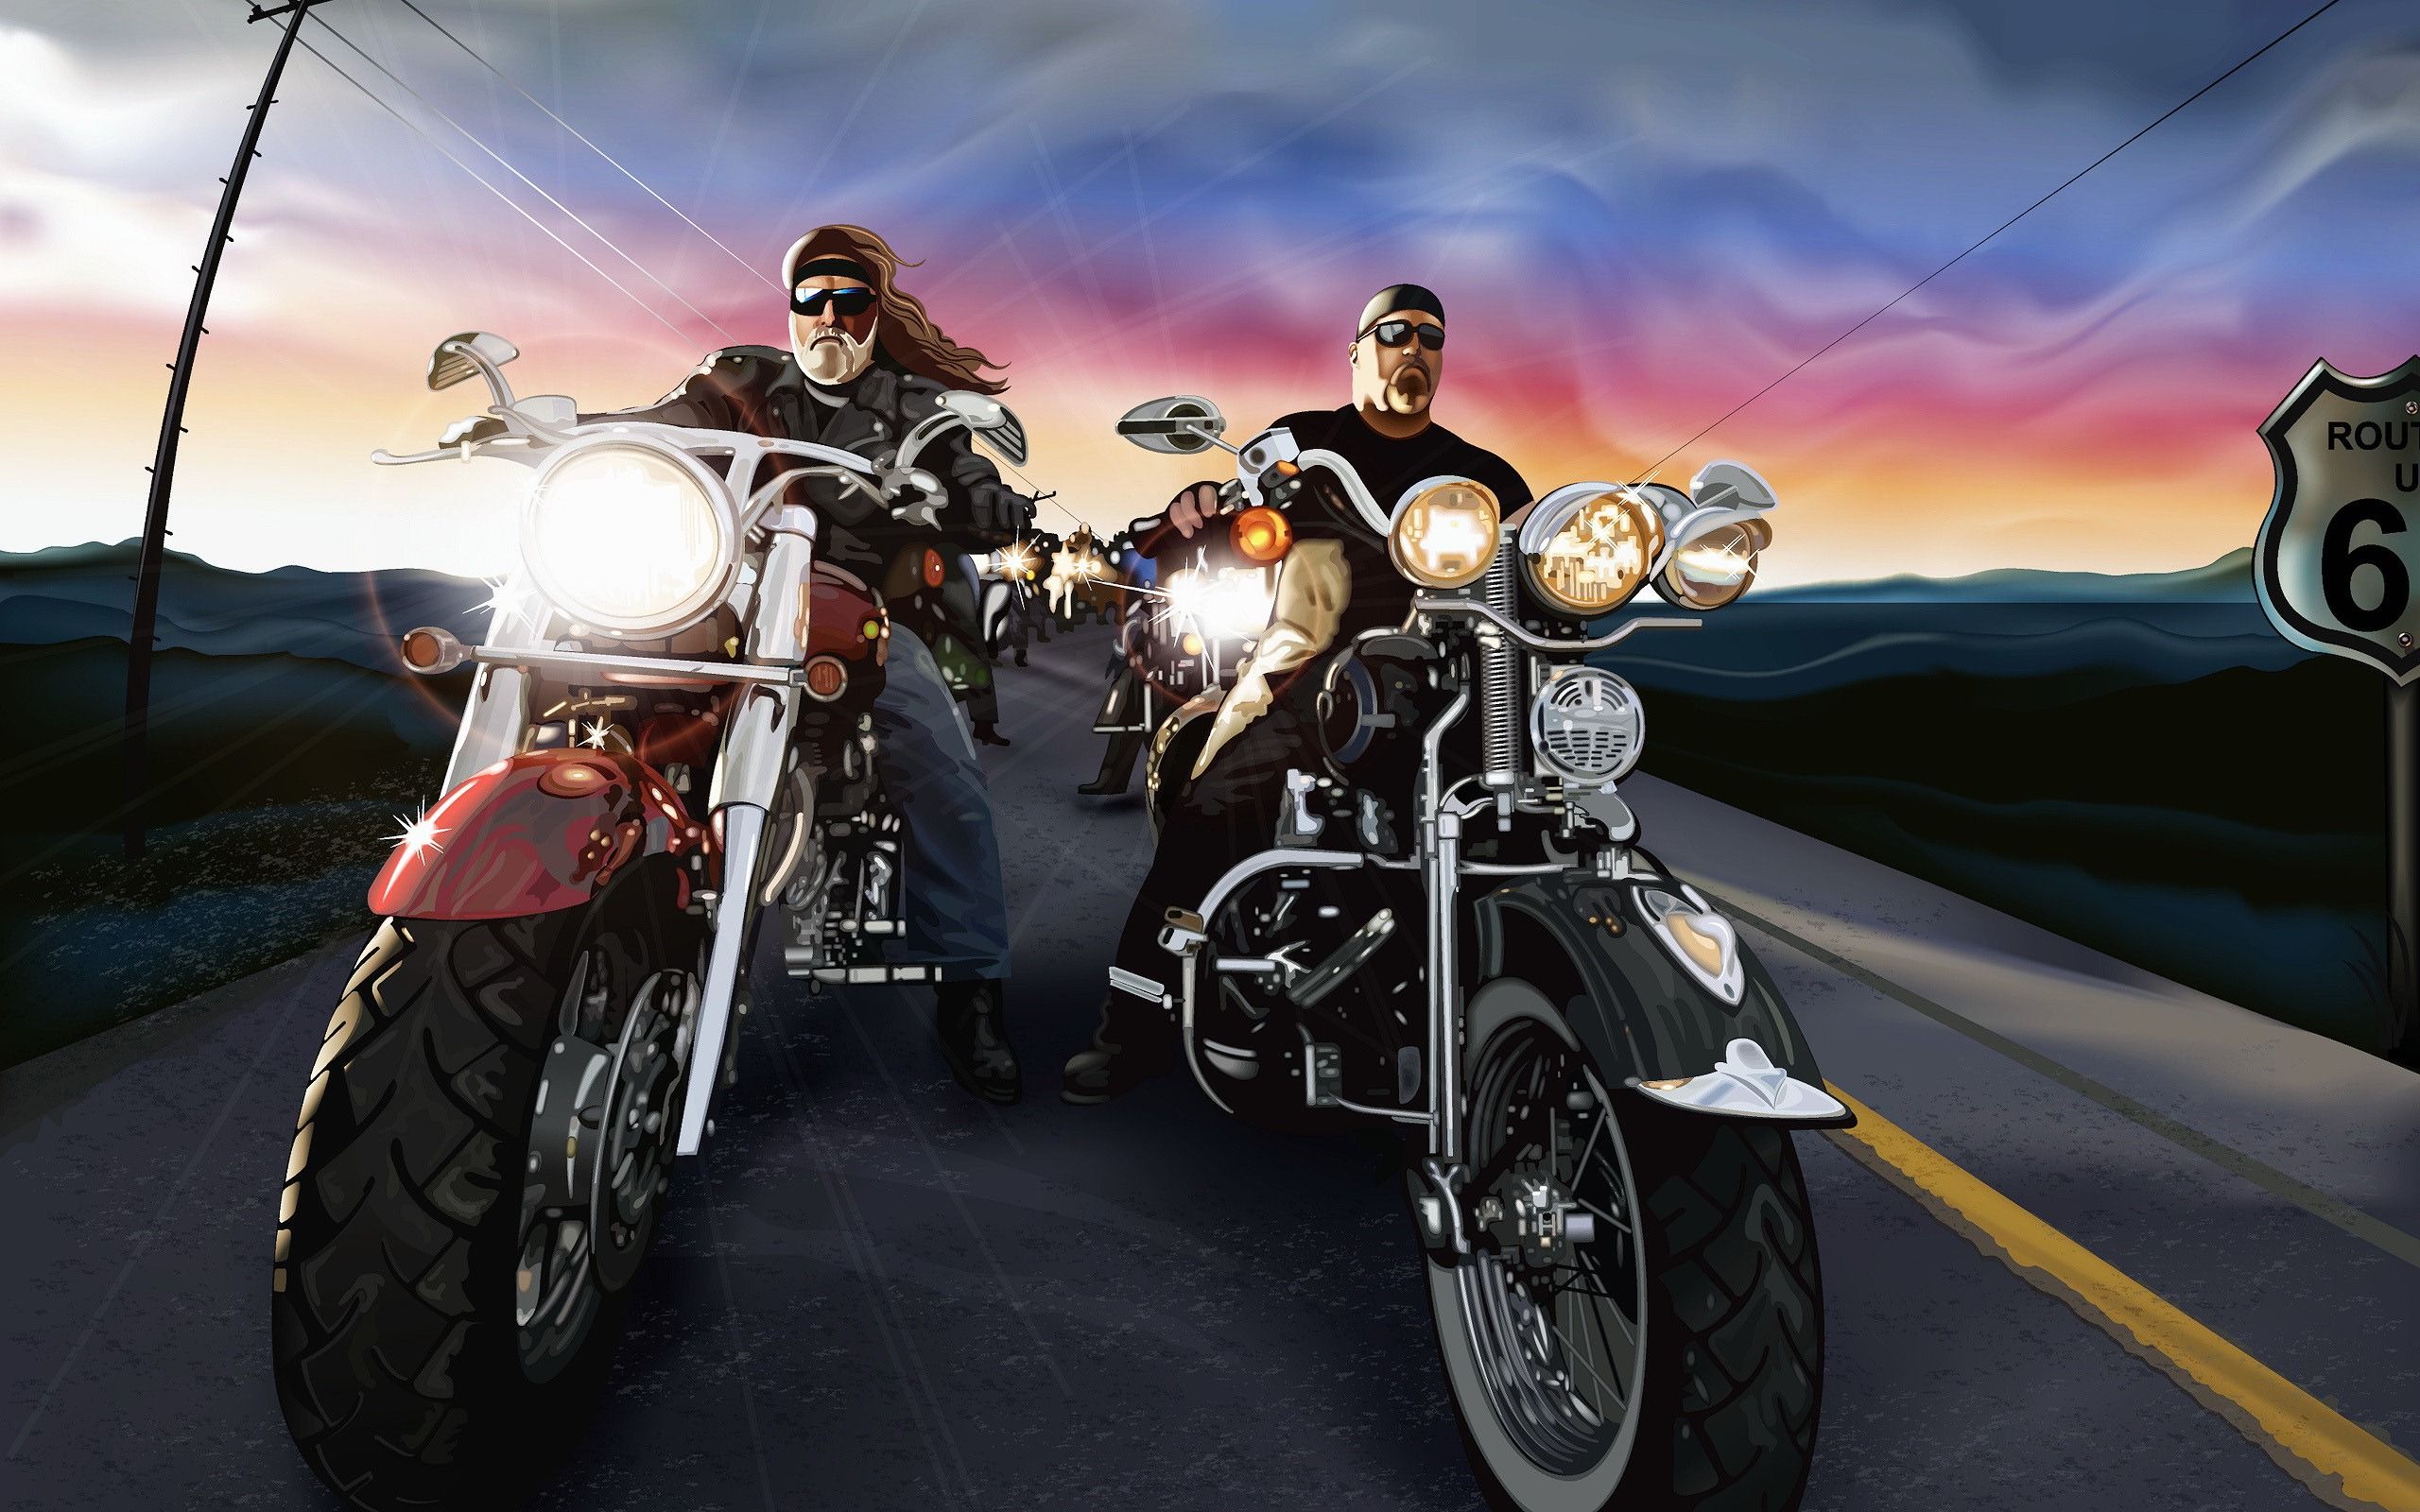 Fonds dcran Harley Davidson tous les wallpapers Harley Davidson